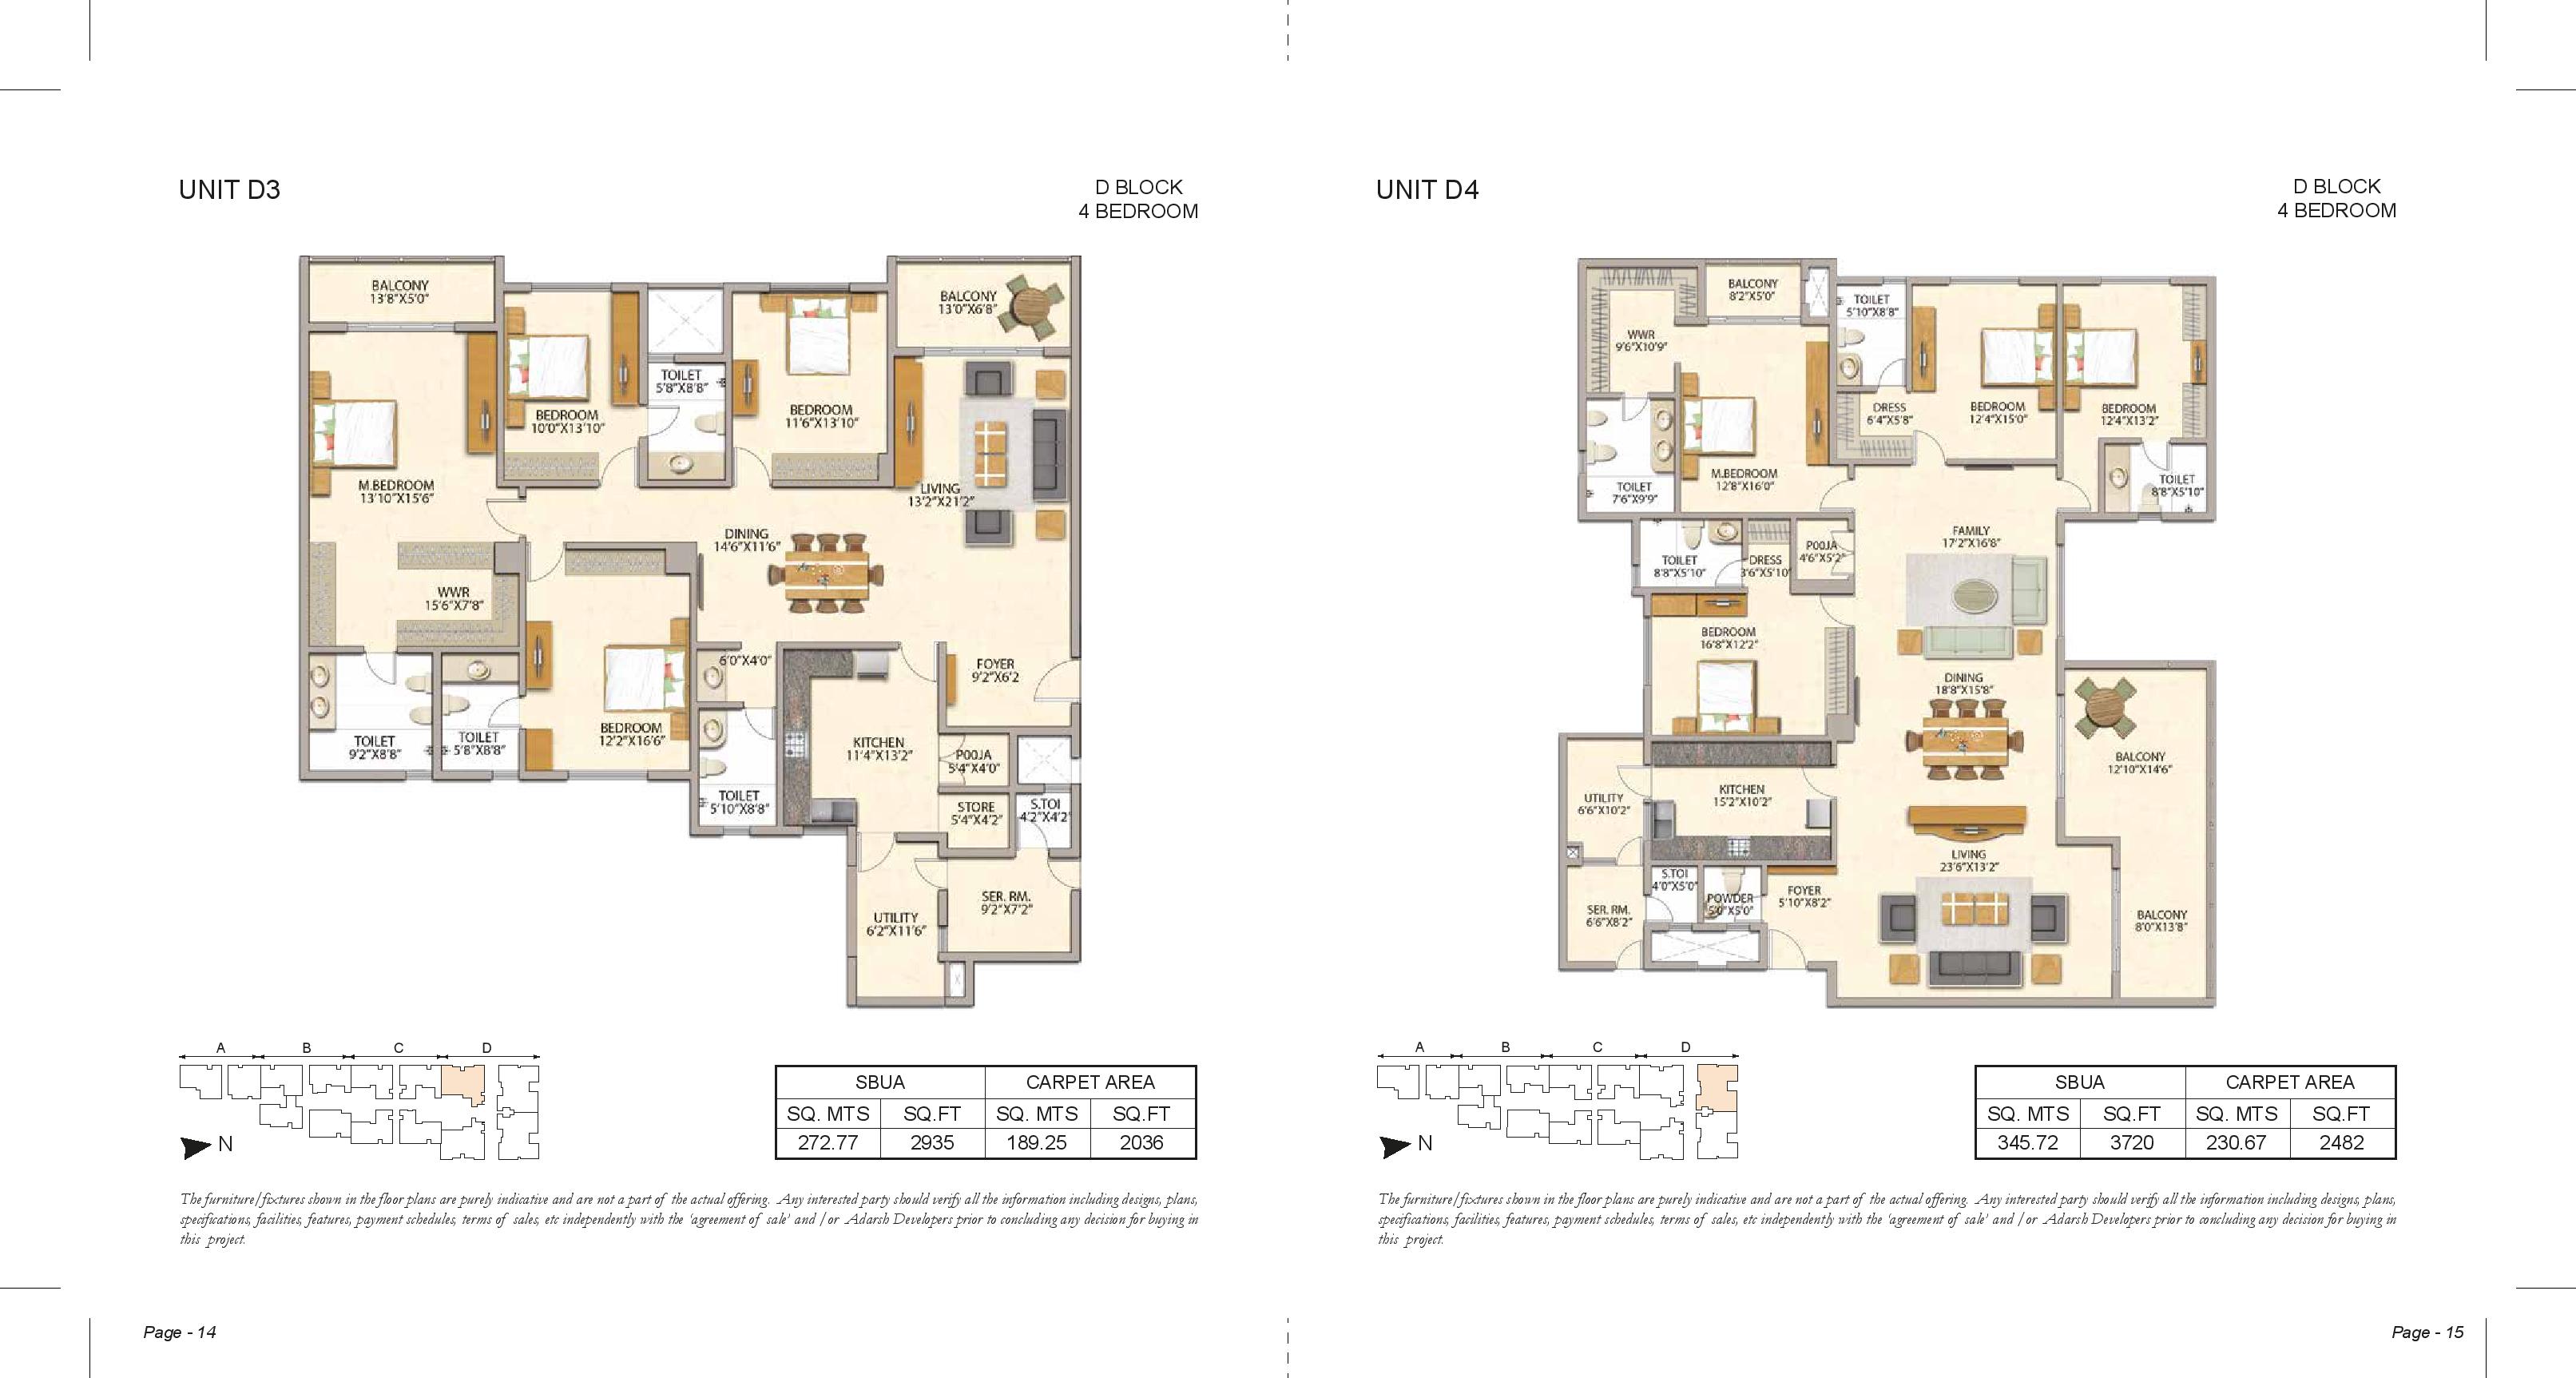 Adarsh Premia D Block 4bhk floor plans